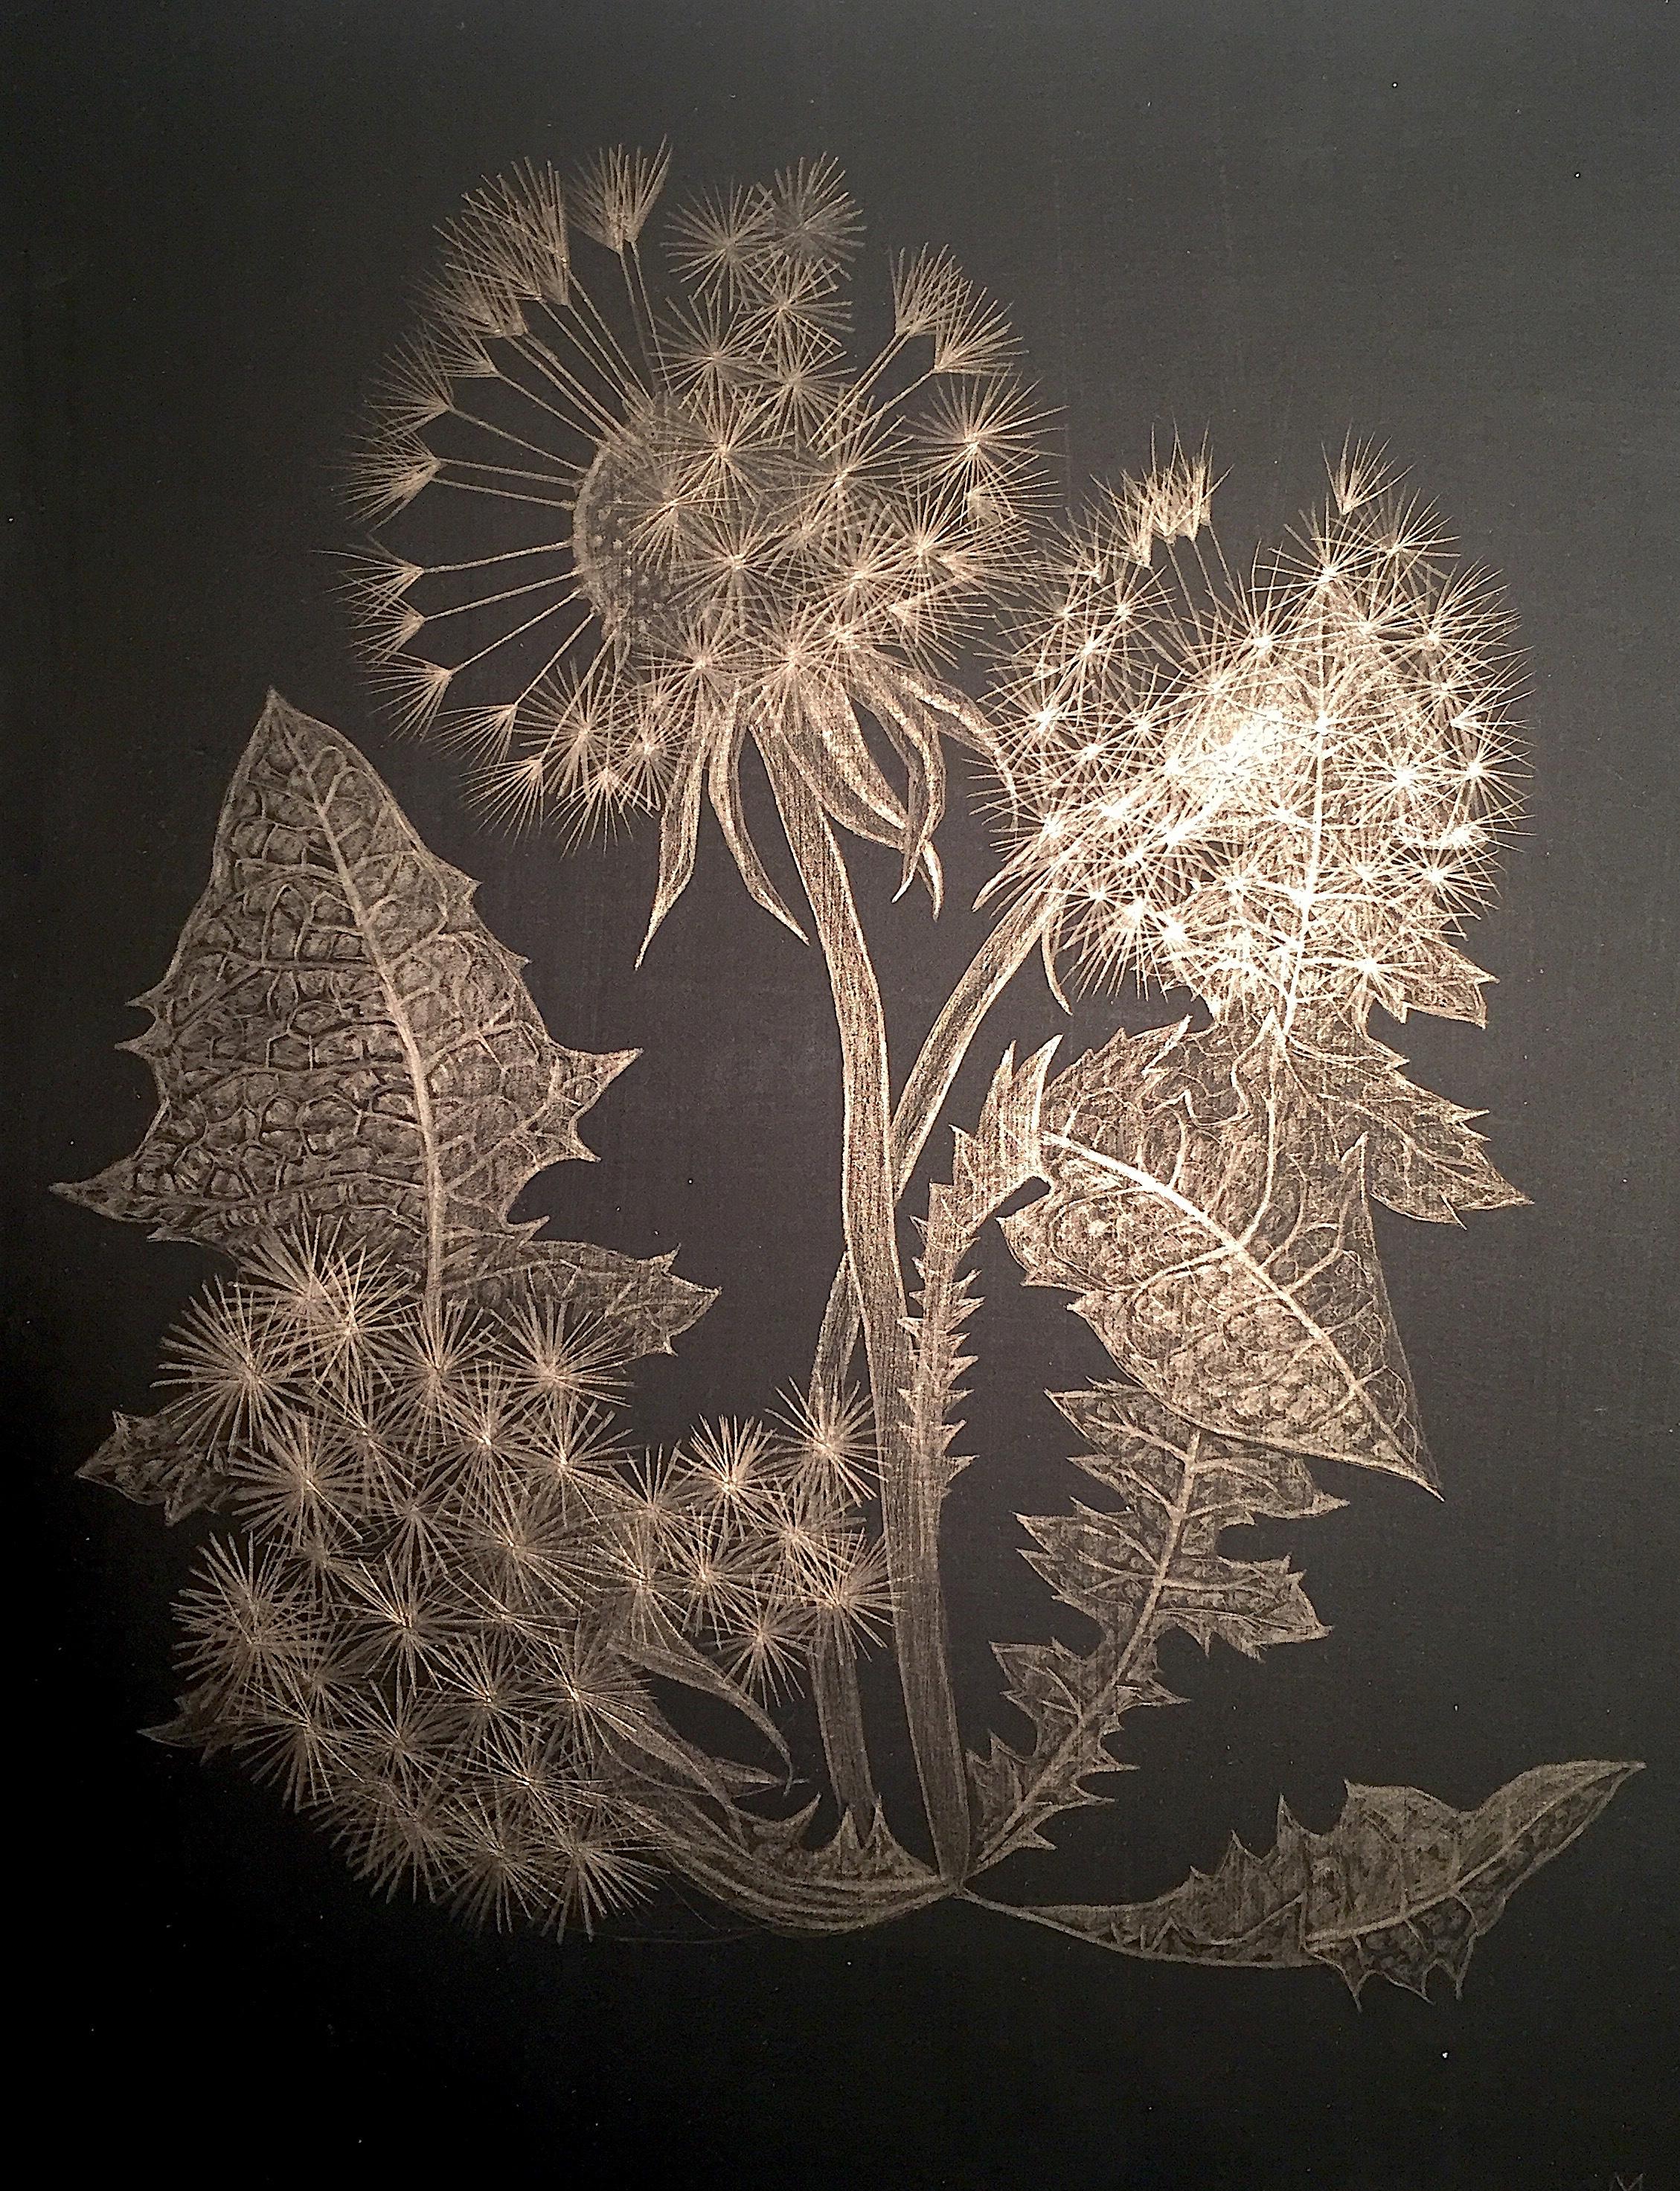 Margot Glass Landscape Art - Dandelion, Small Botanical Drawing on Black Paper Made with 14K Gold